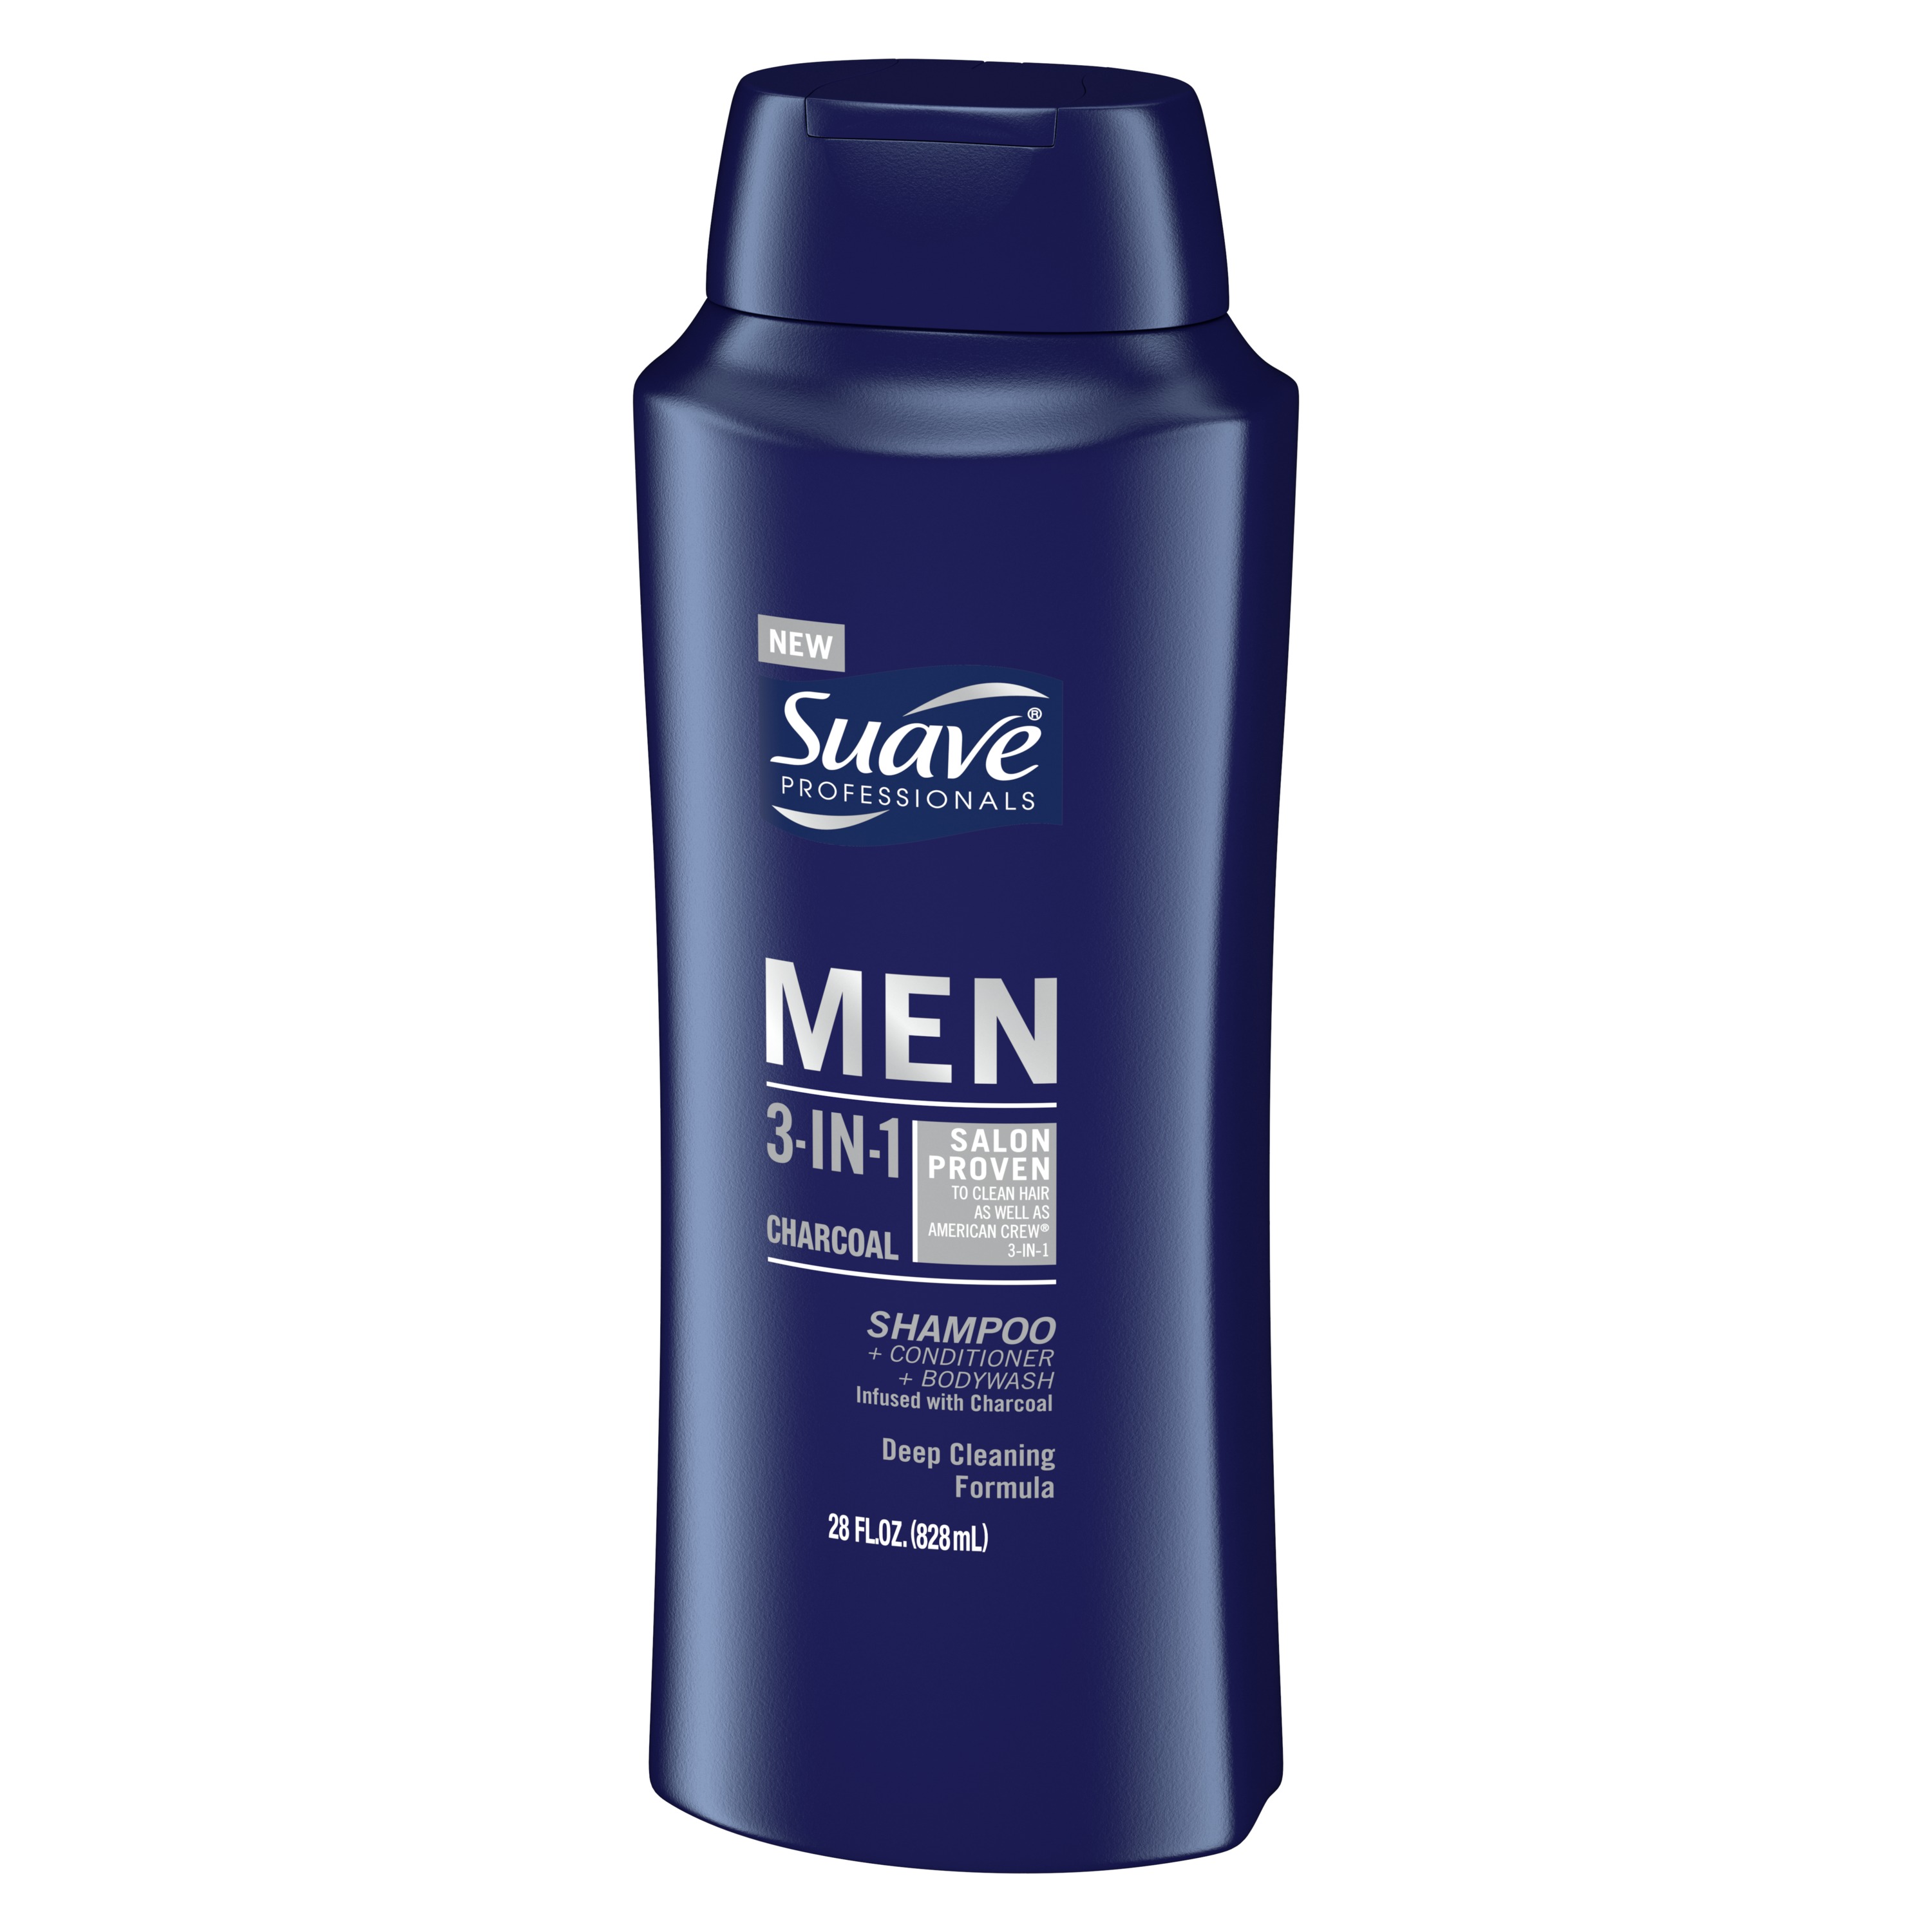 Suave Professionals Men 3-in-1 Shampoo, Conditioner & Body Wash, Charcoal, 28 fl oz - image 4 of 6